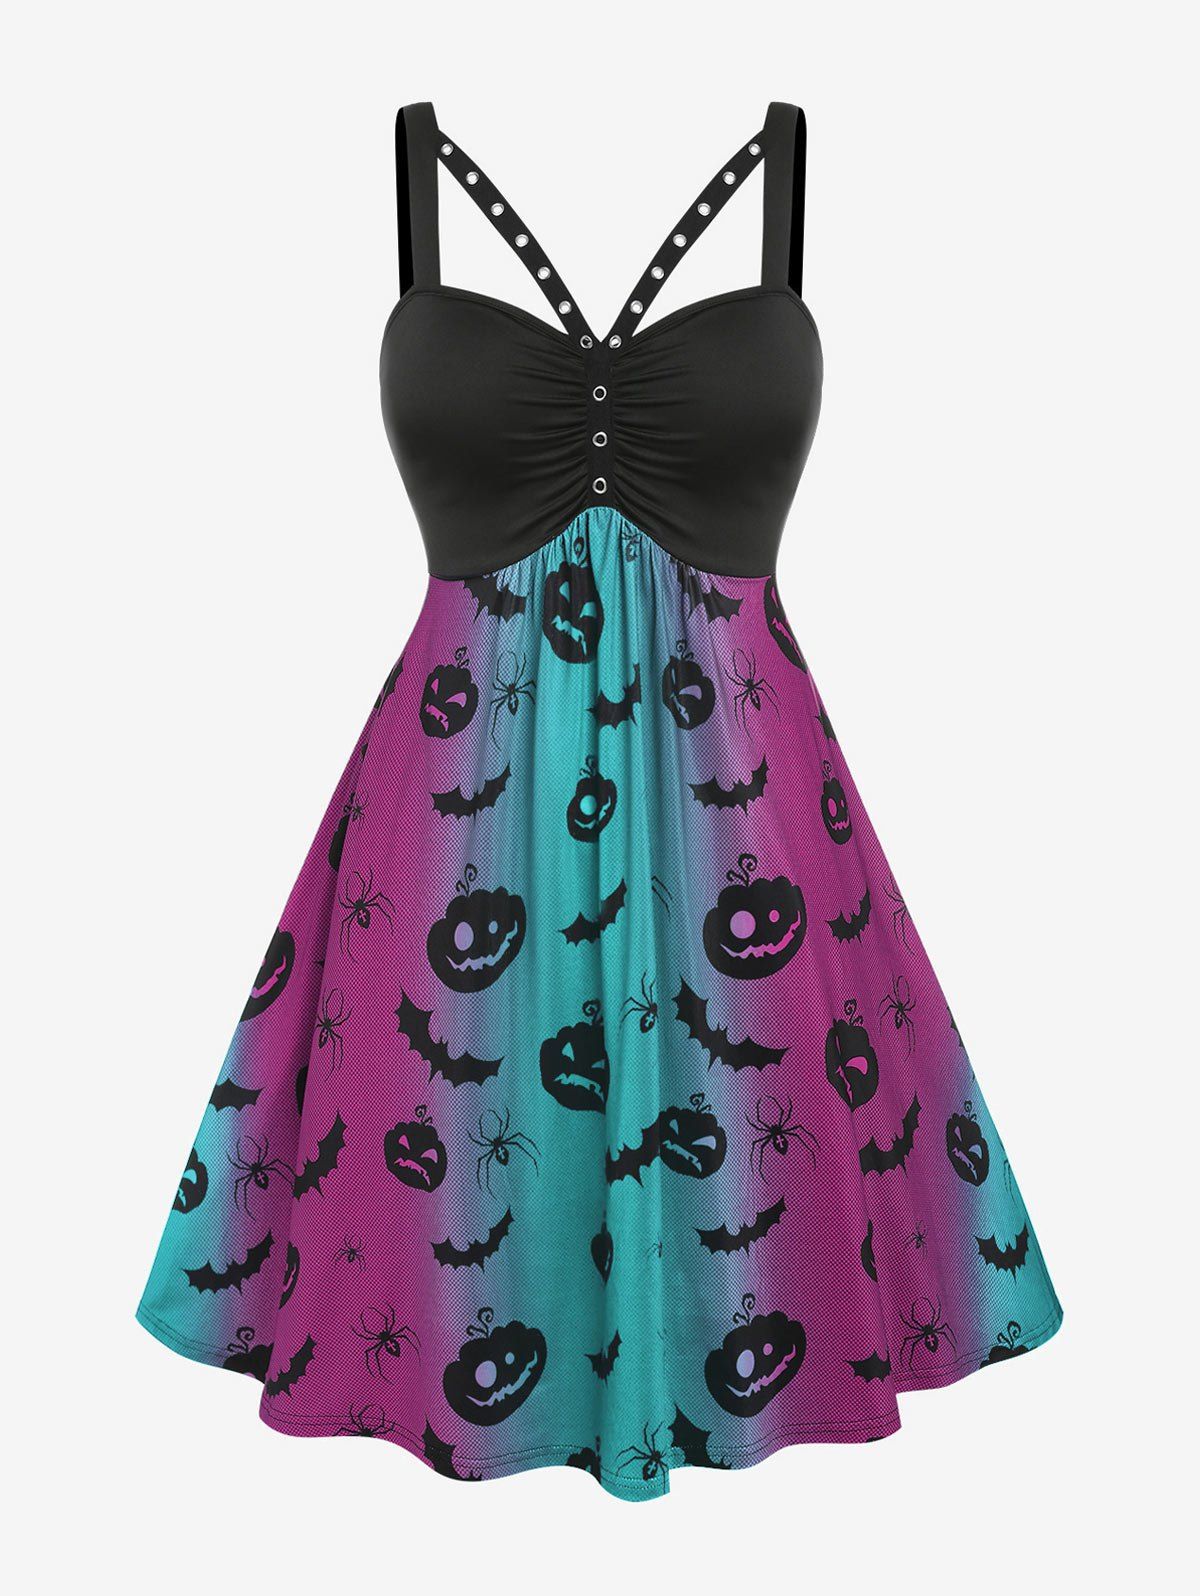 Plus Size Grommet Pumpkin Bat Print Dress - PURPLE 3X